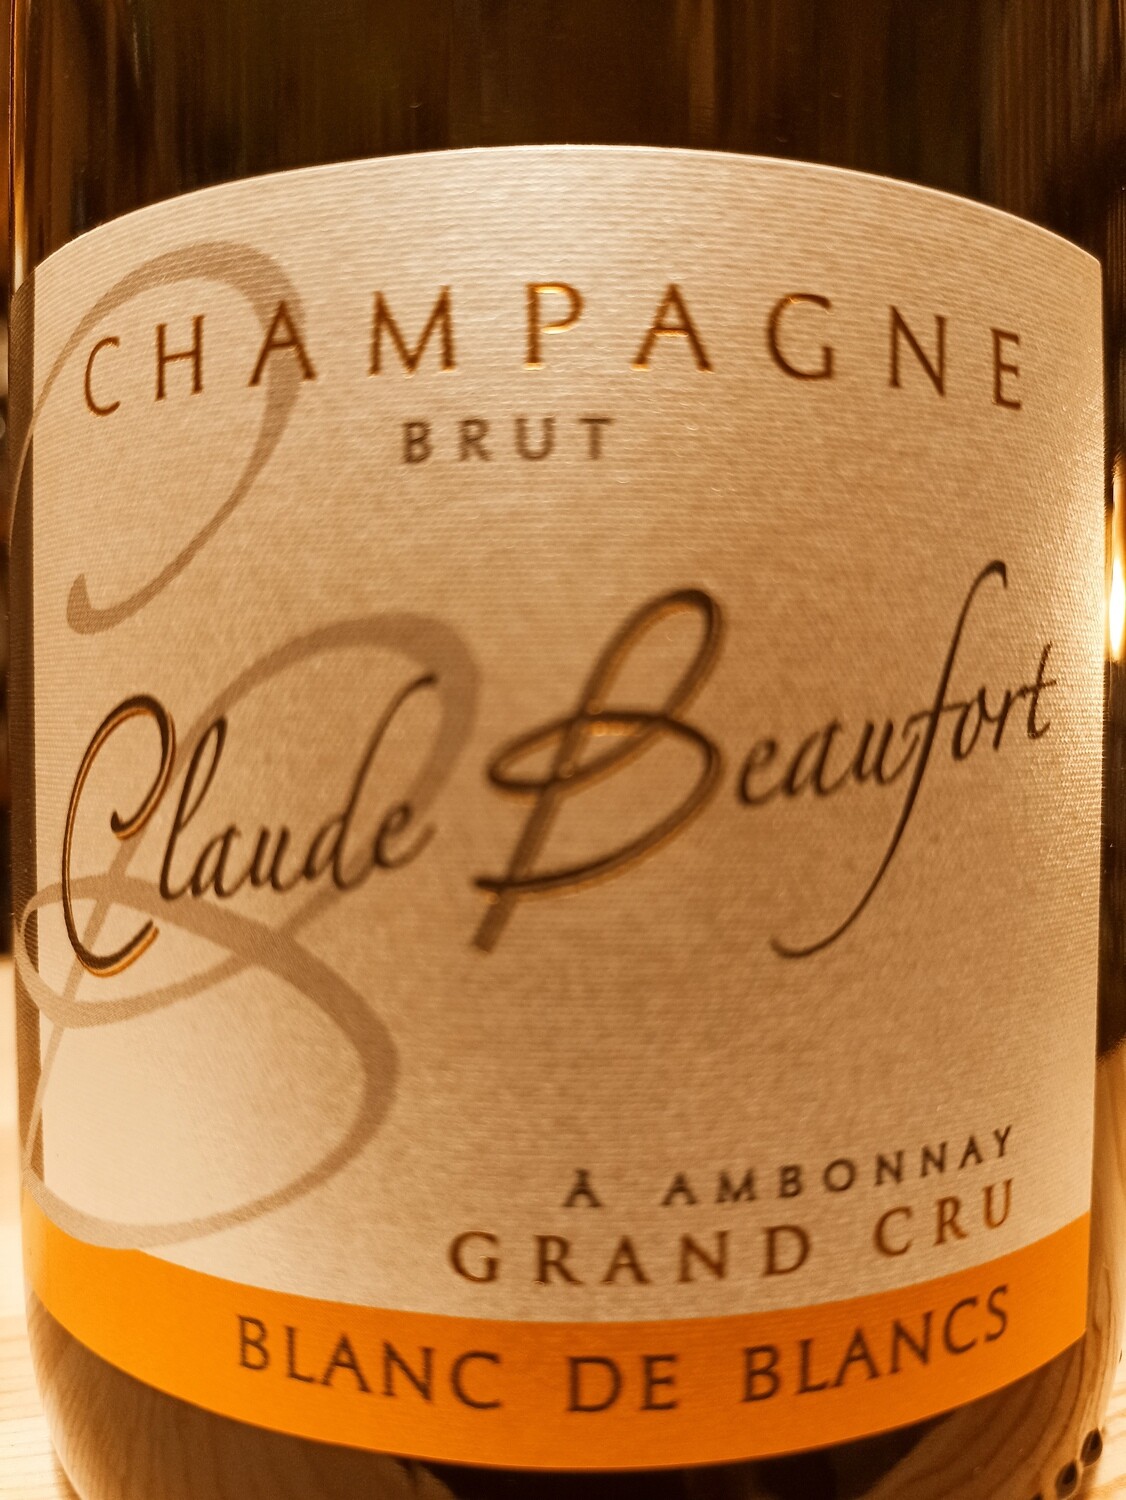 CHAMPAGNE CLAIUDE BEAUFORT BRUT GRAND CRUBLANC DE BLANCS (R.M. A AMBONNAY) (N. 1 BOTTIGLIA)